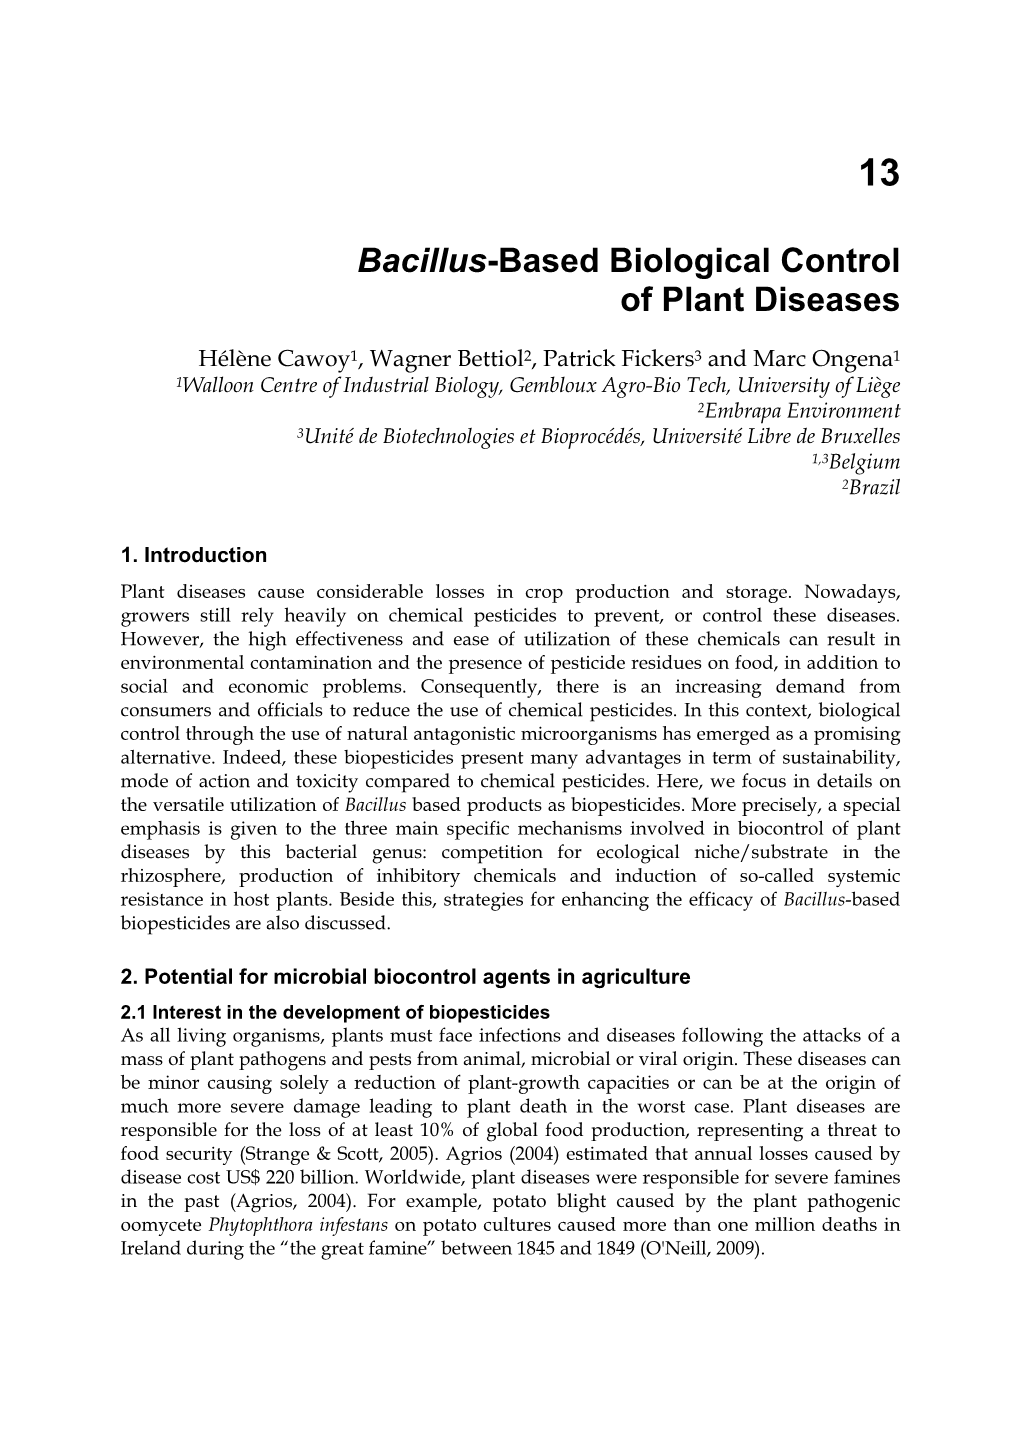 Bacillus-Based Biological Control of Plant Diseases